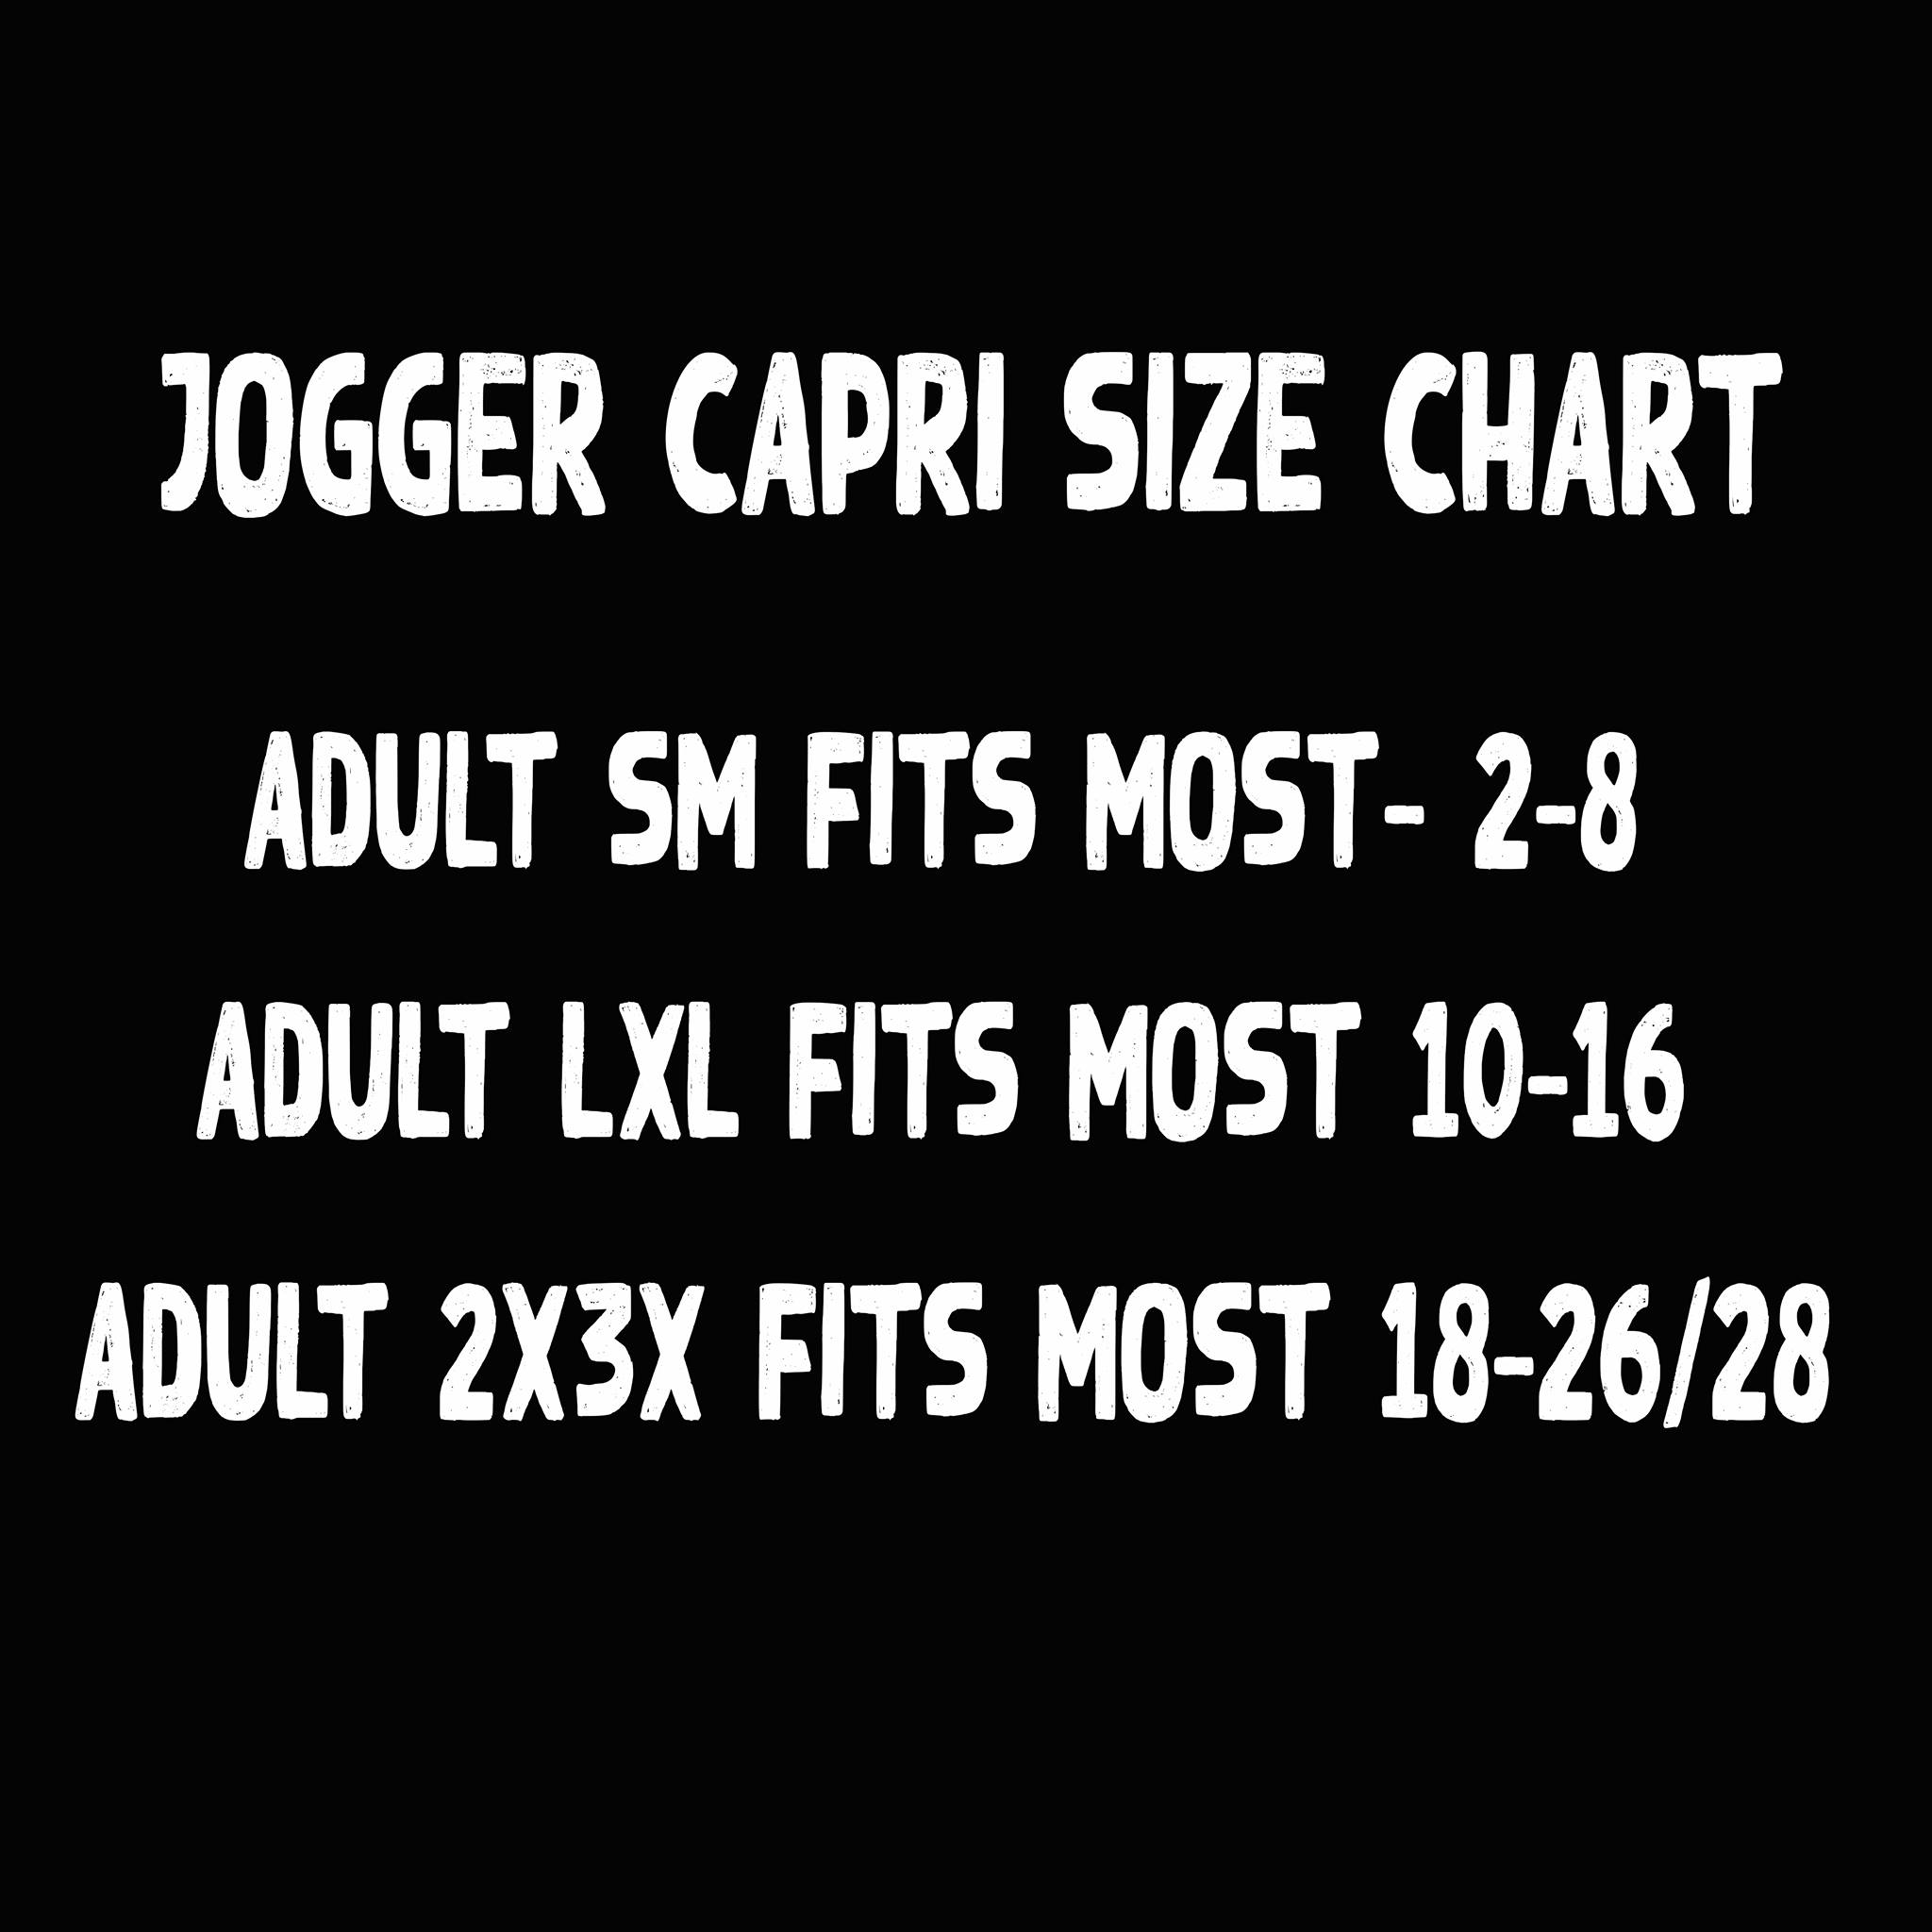 JELLYFISH-Capri and Jogger Capri